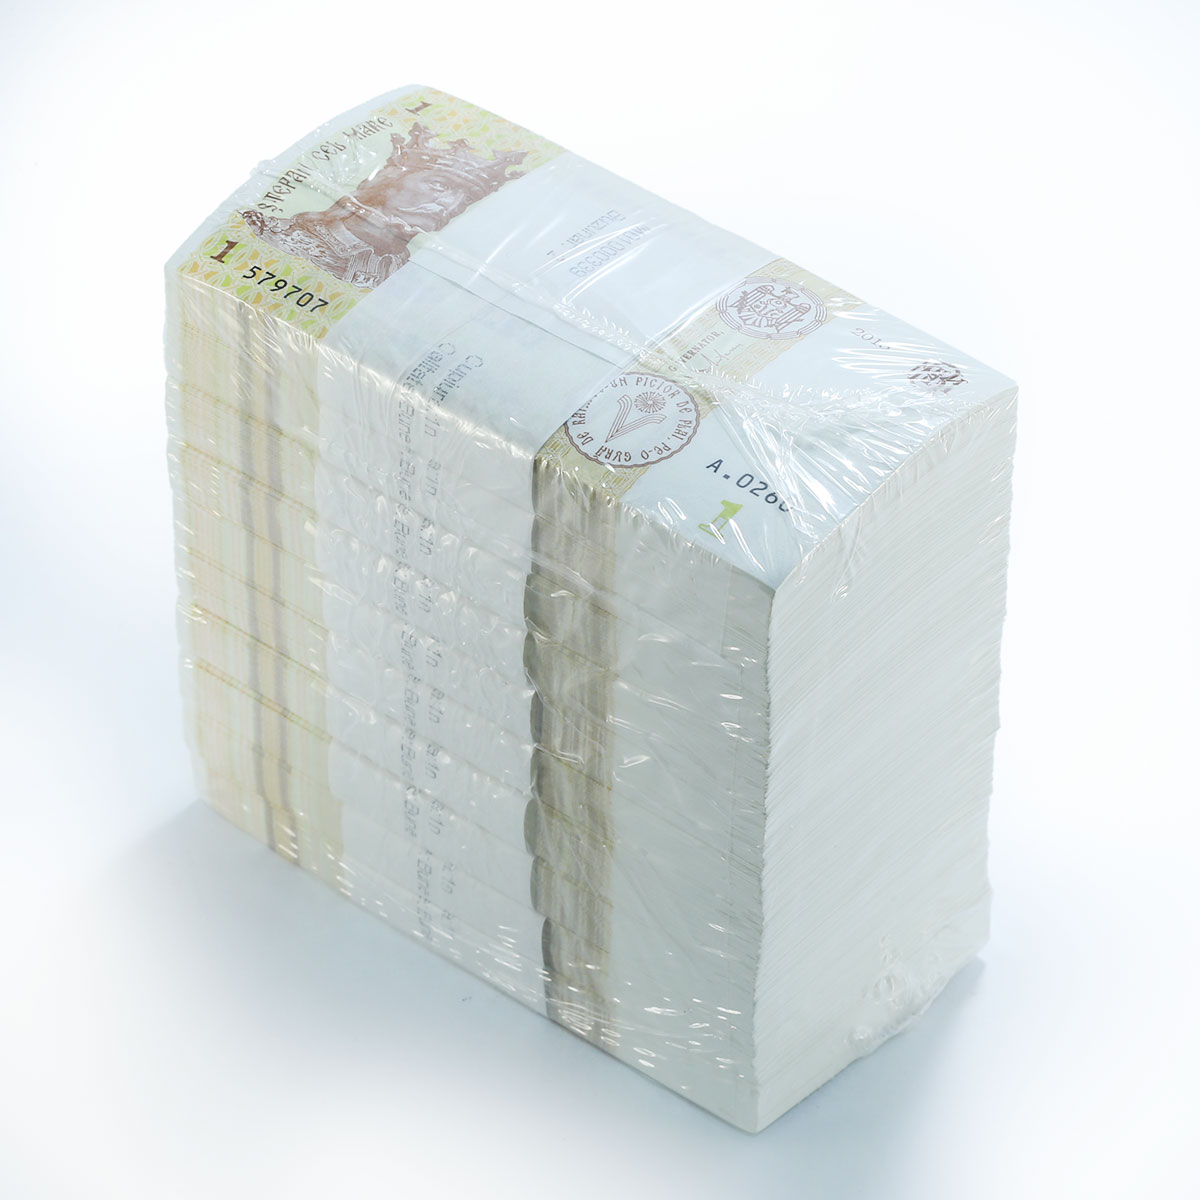 Moldova 1 lei 1000 banknotes bank status